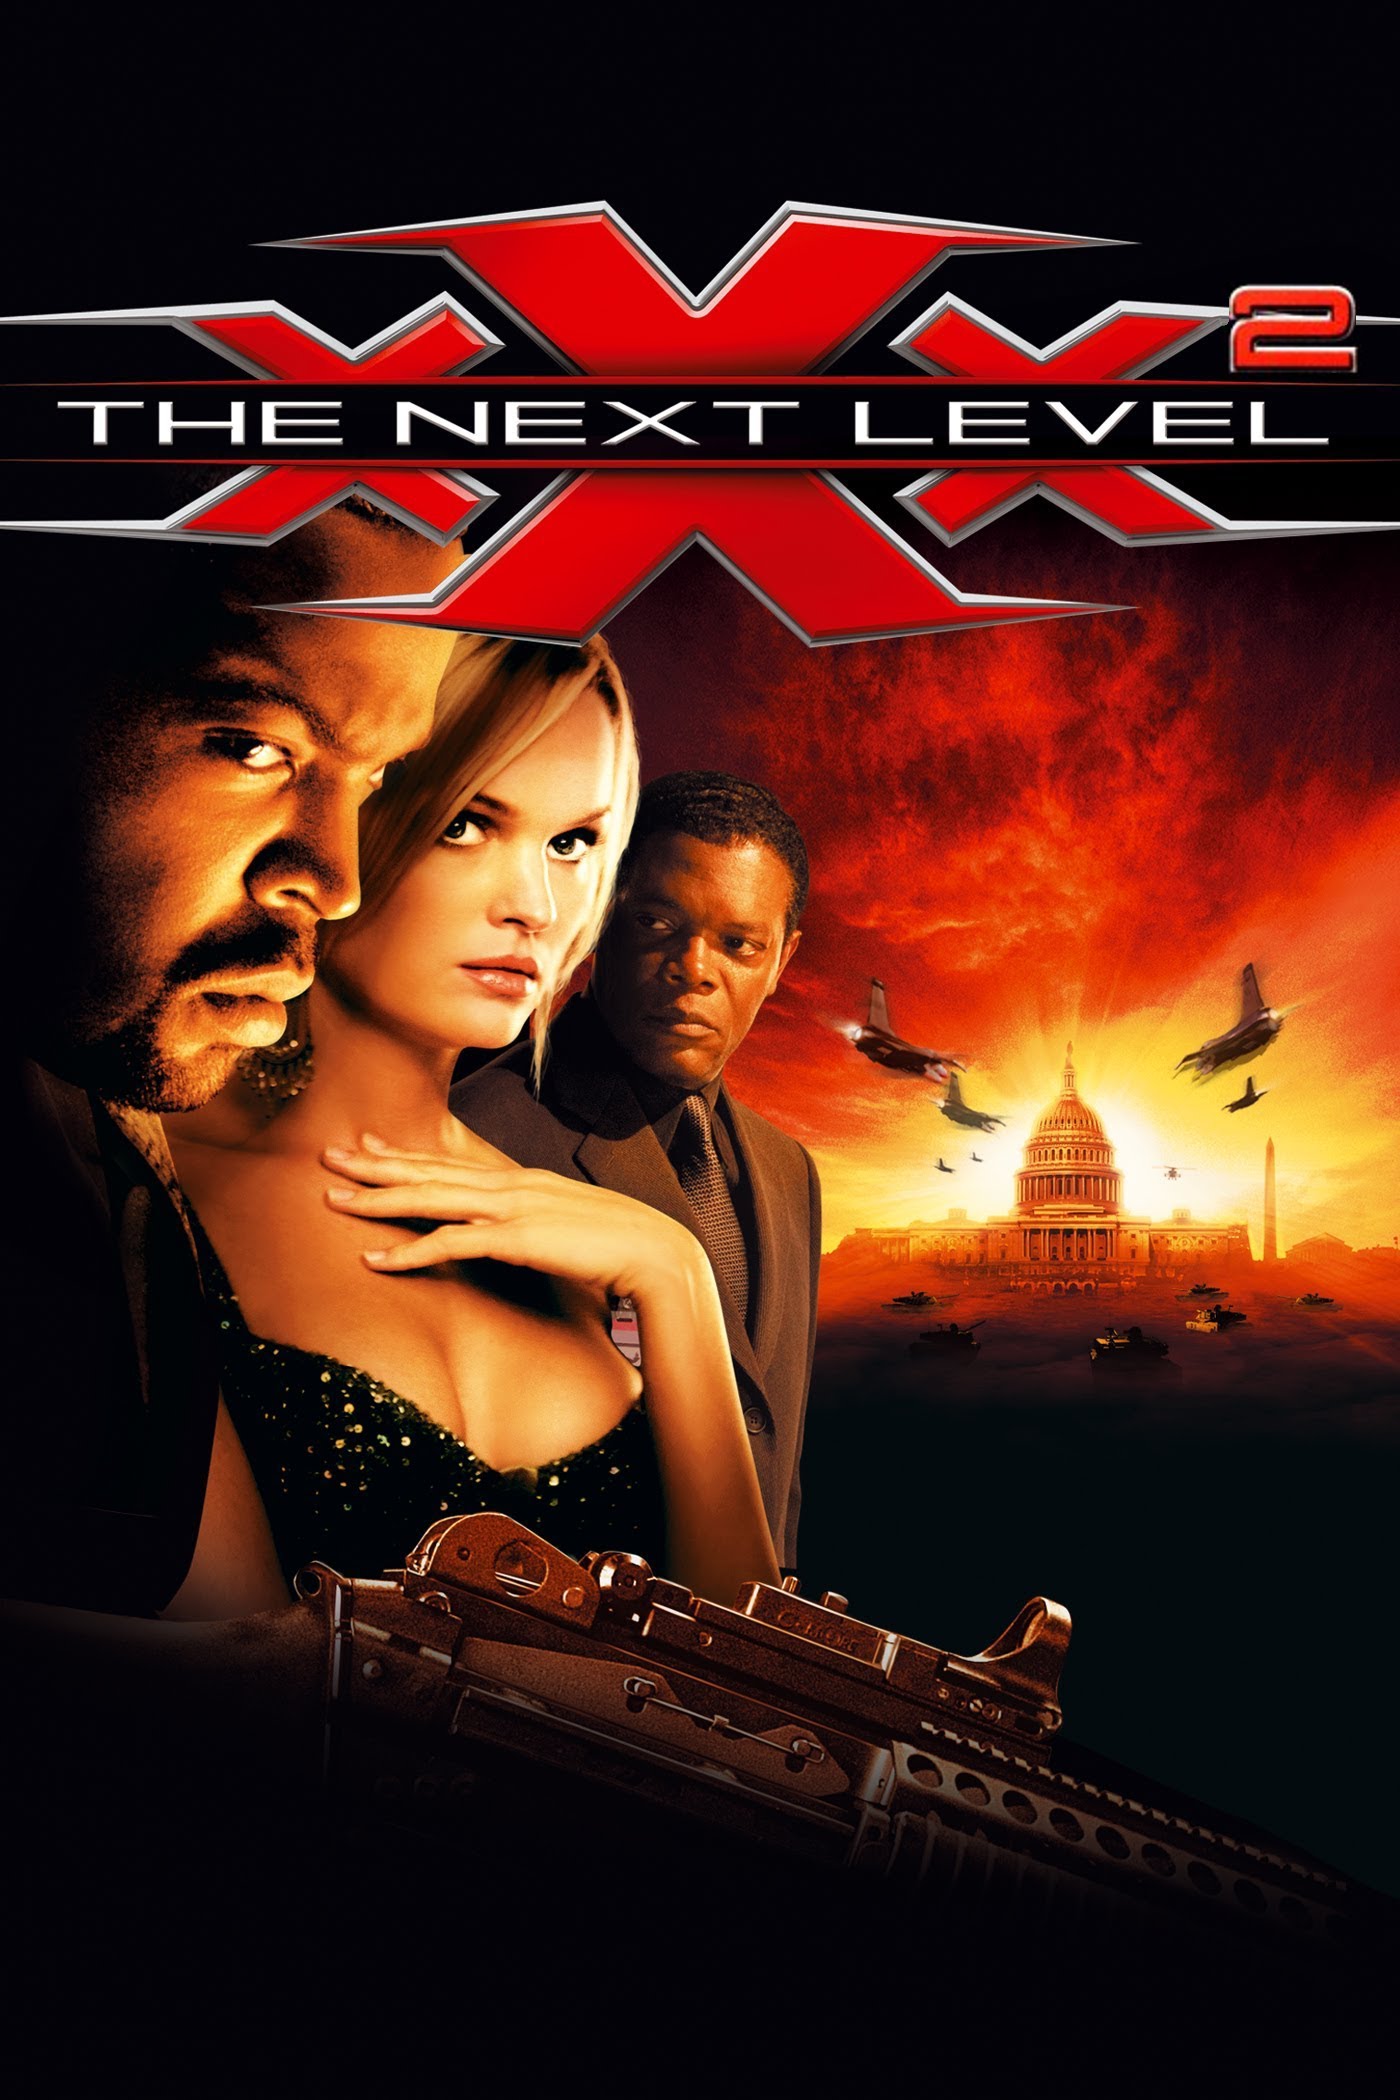 xXx 2 – The Next Level [HD] (2005)